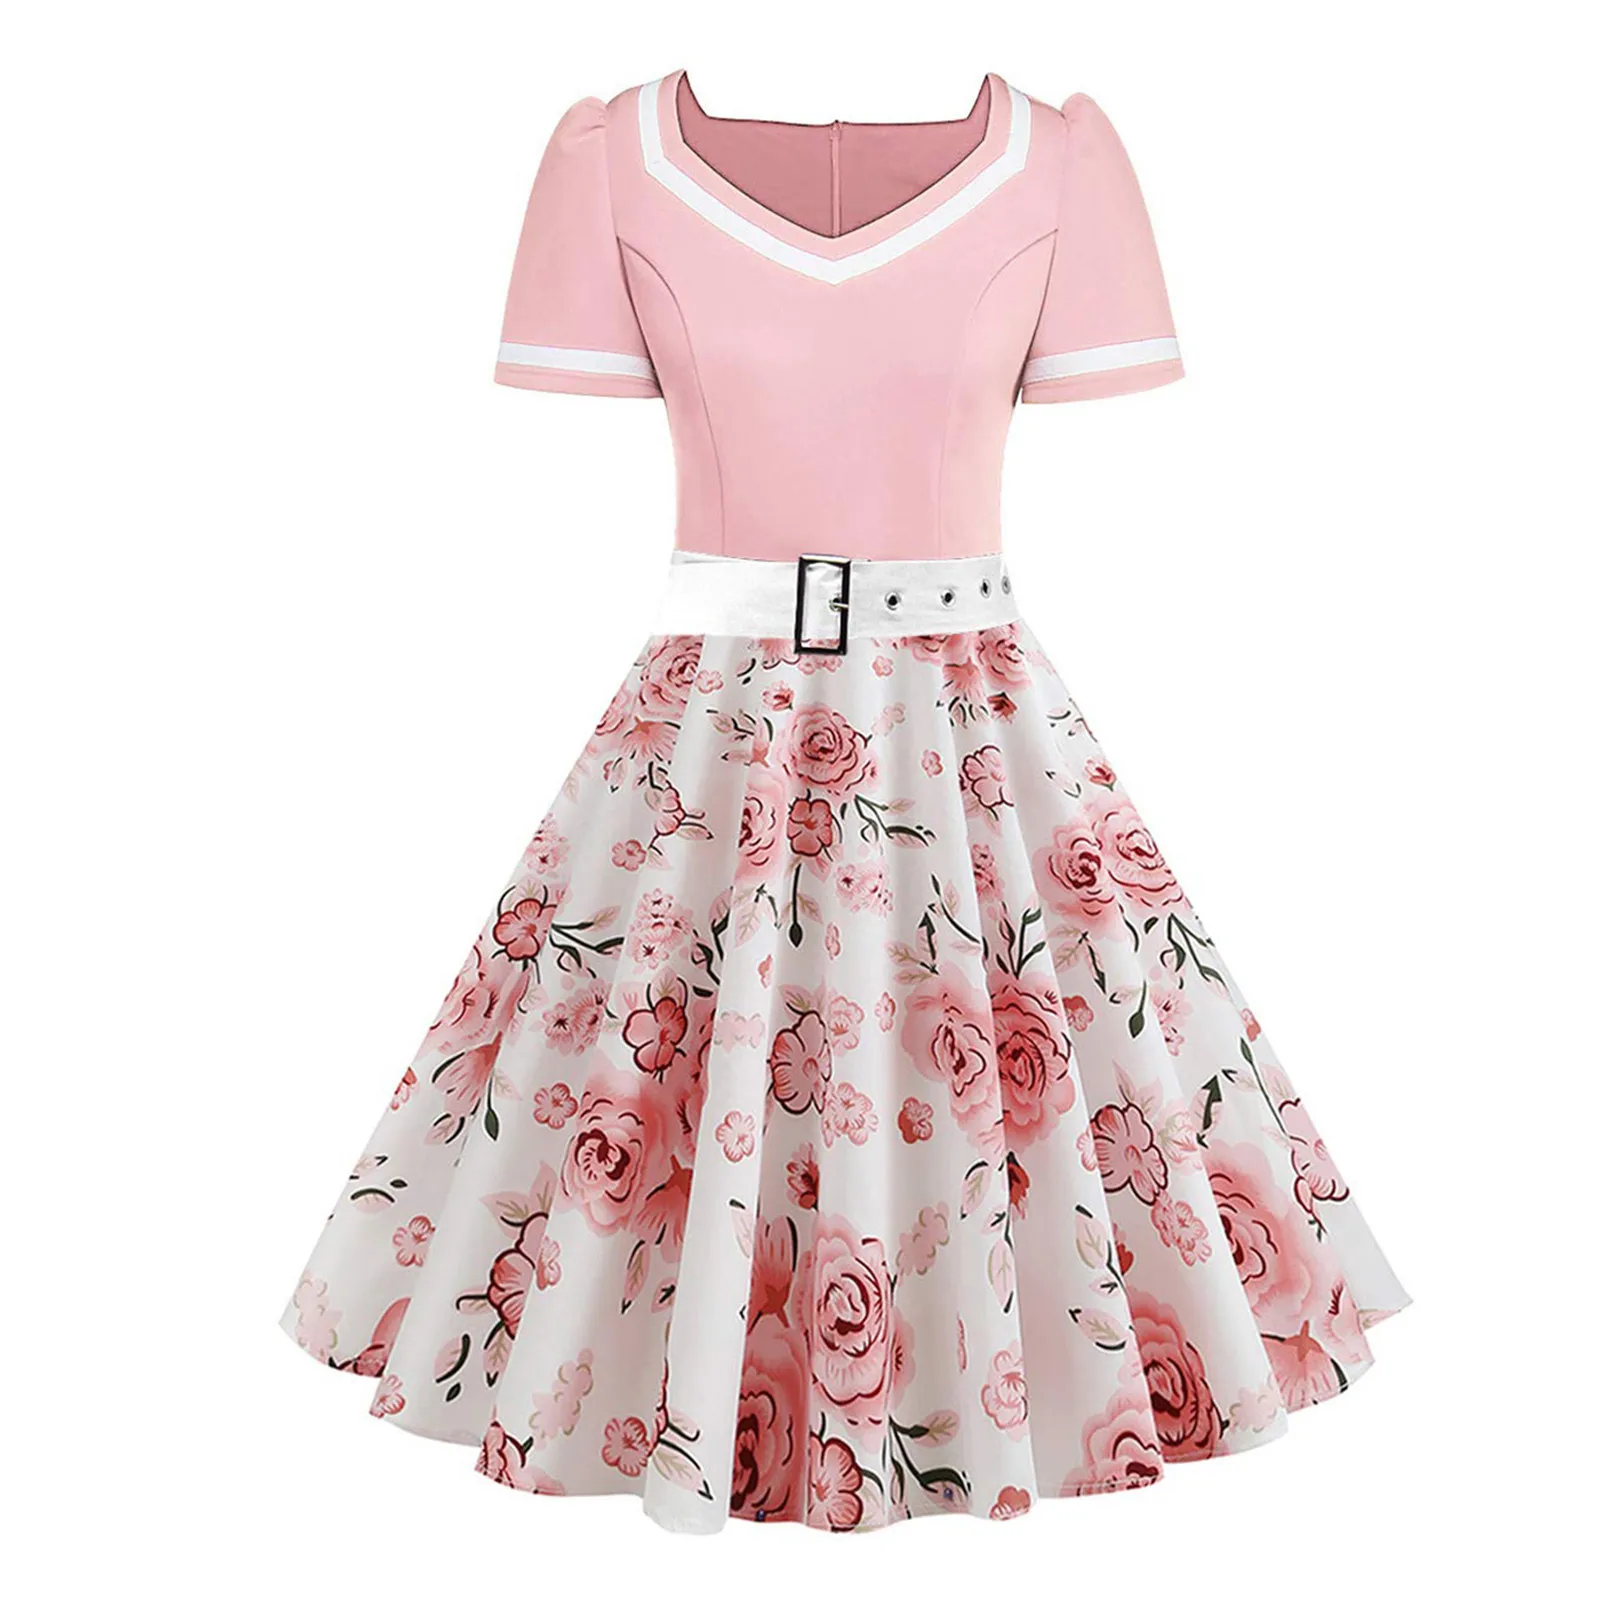 Pink-Floral-Print-Vintage-Party-Dress-Women-Rockabilly-Swing-Casual-A-line-Dress-With-Belt-Elegant.jpg